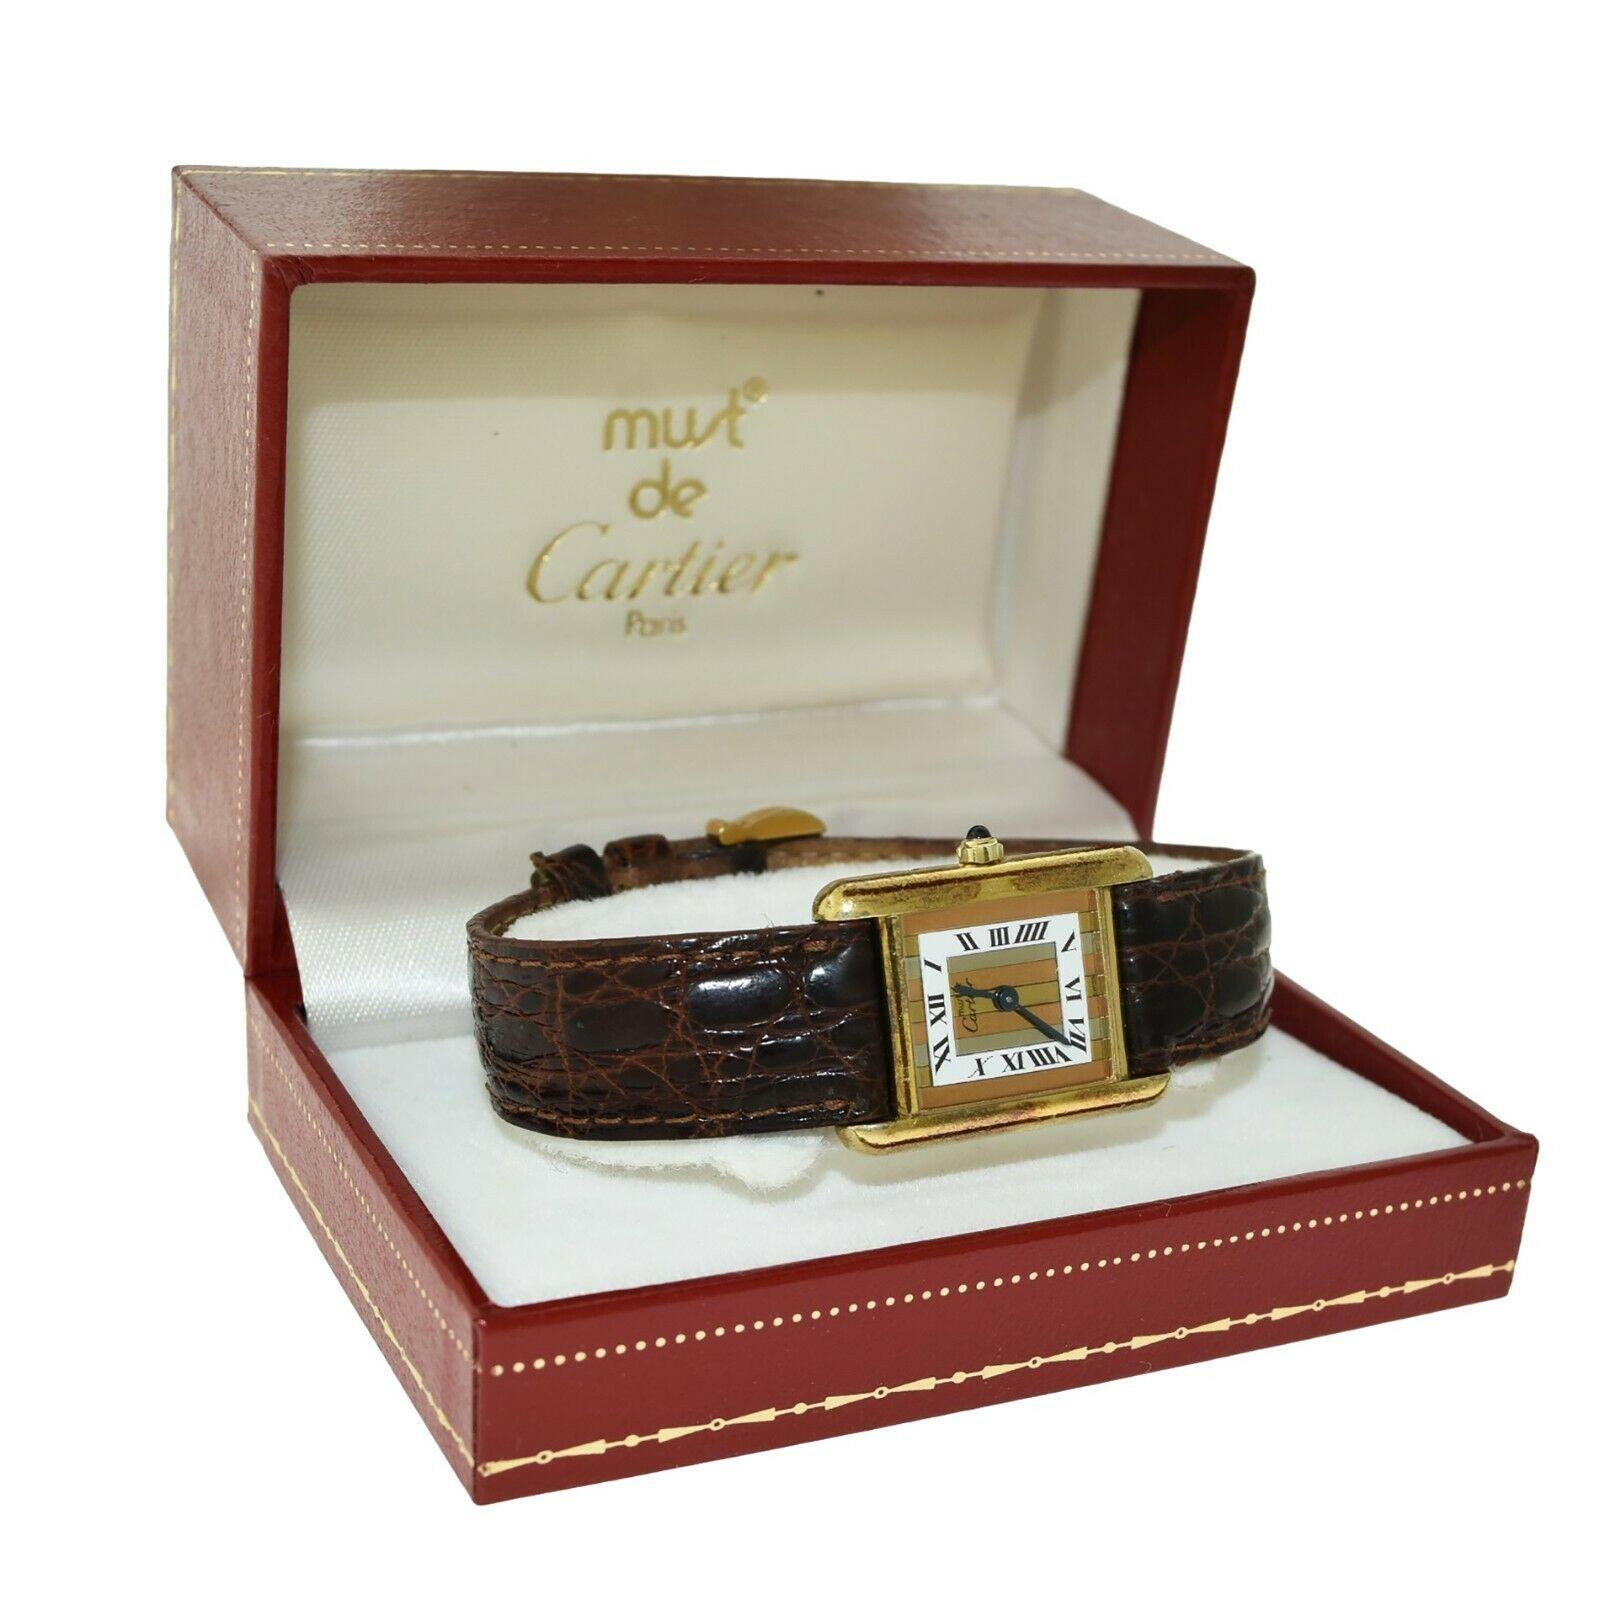 Brilliance Jewels, Miami
Questions? Call Us Anytime!
786,482,8100

Brand: Cartier

Collection: Must de Cartier

Model: Tank Vermeil

Ref. No.: 366001

Case Size: 20.50 x 20  mm  

Movement: Quartz

Case Material: Silver- gilt

Dial Color: Tri-gold/